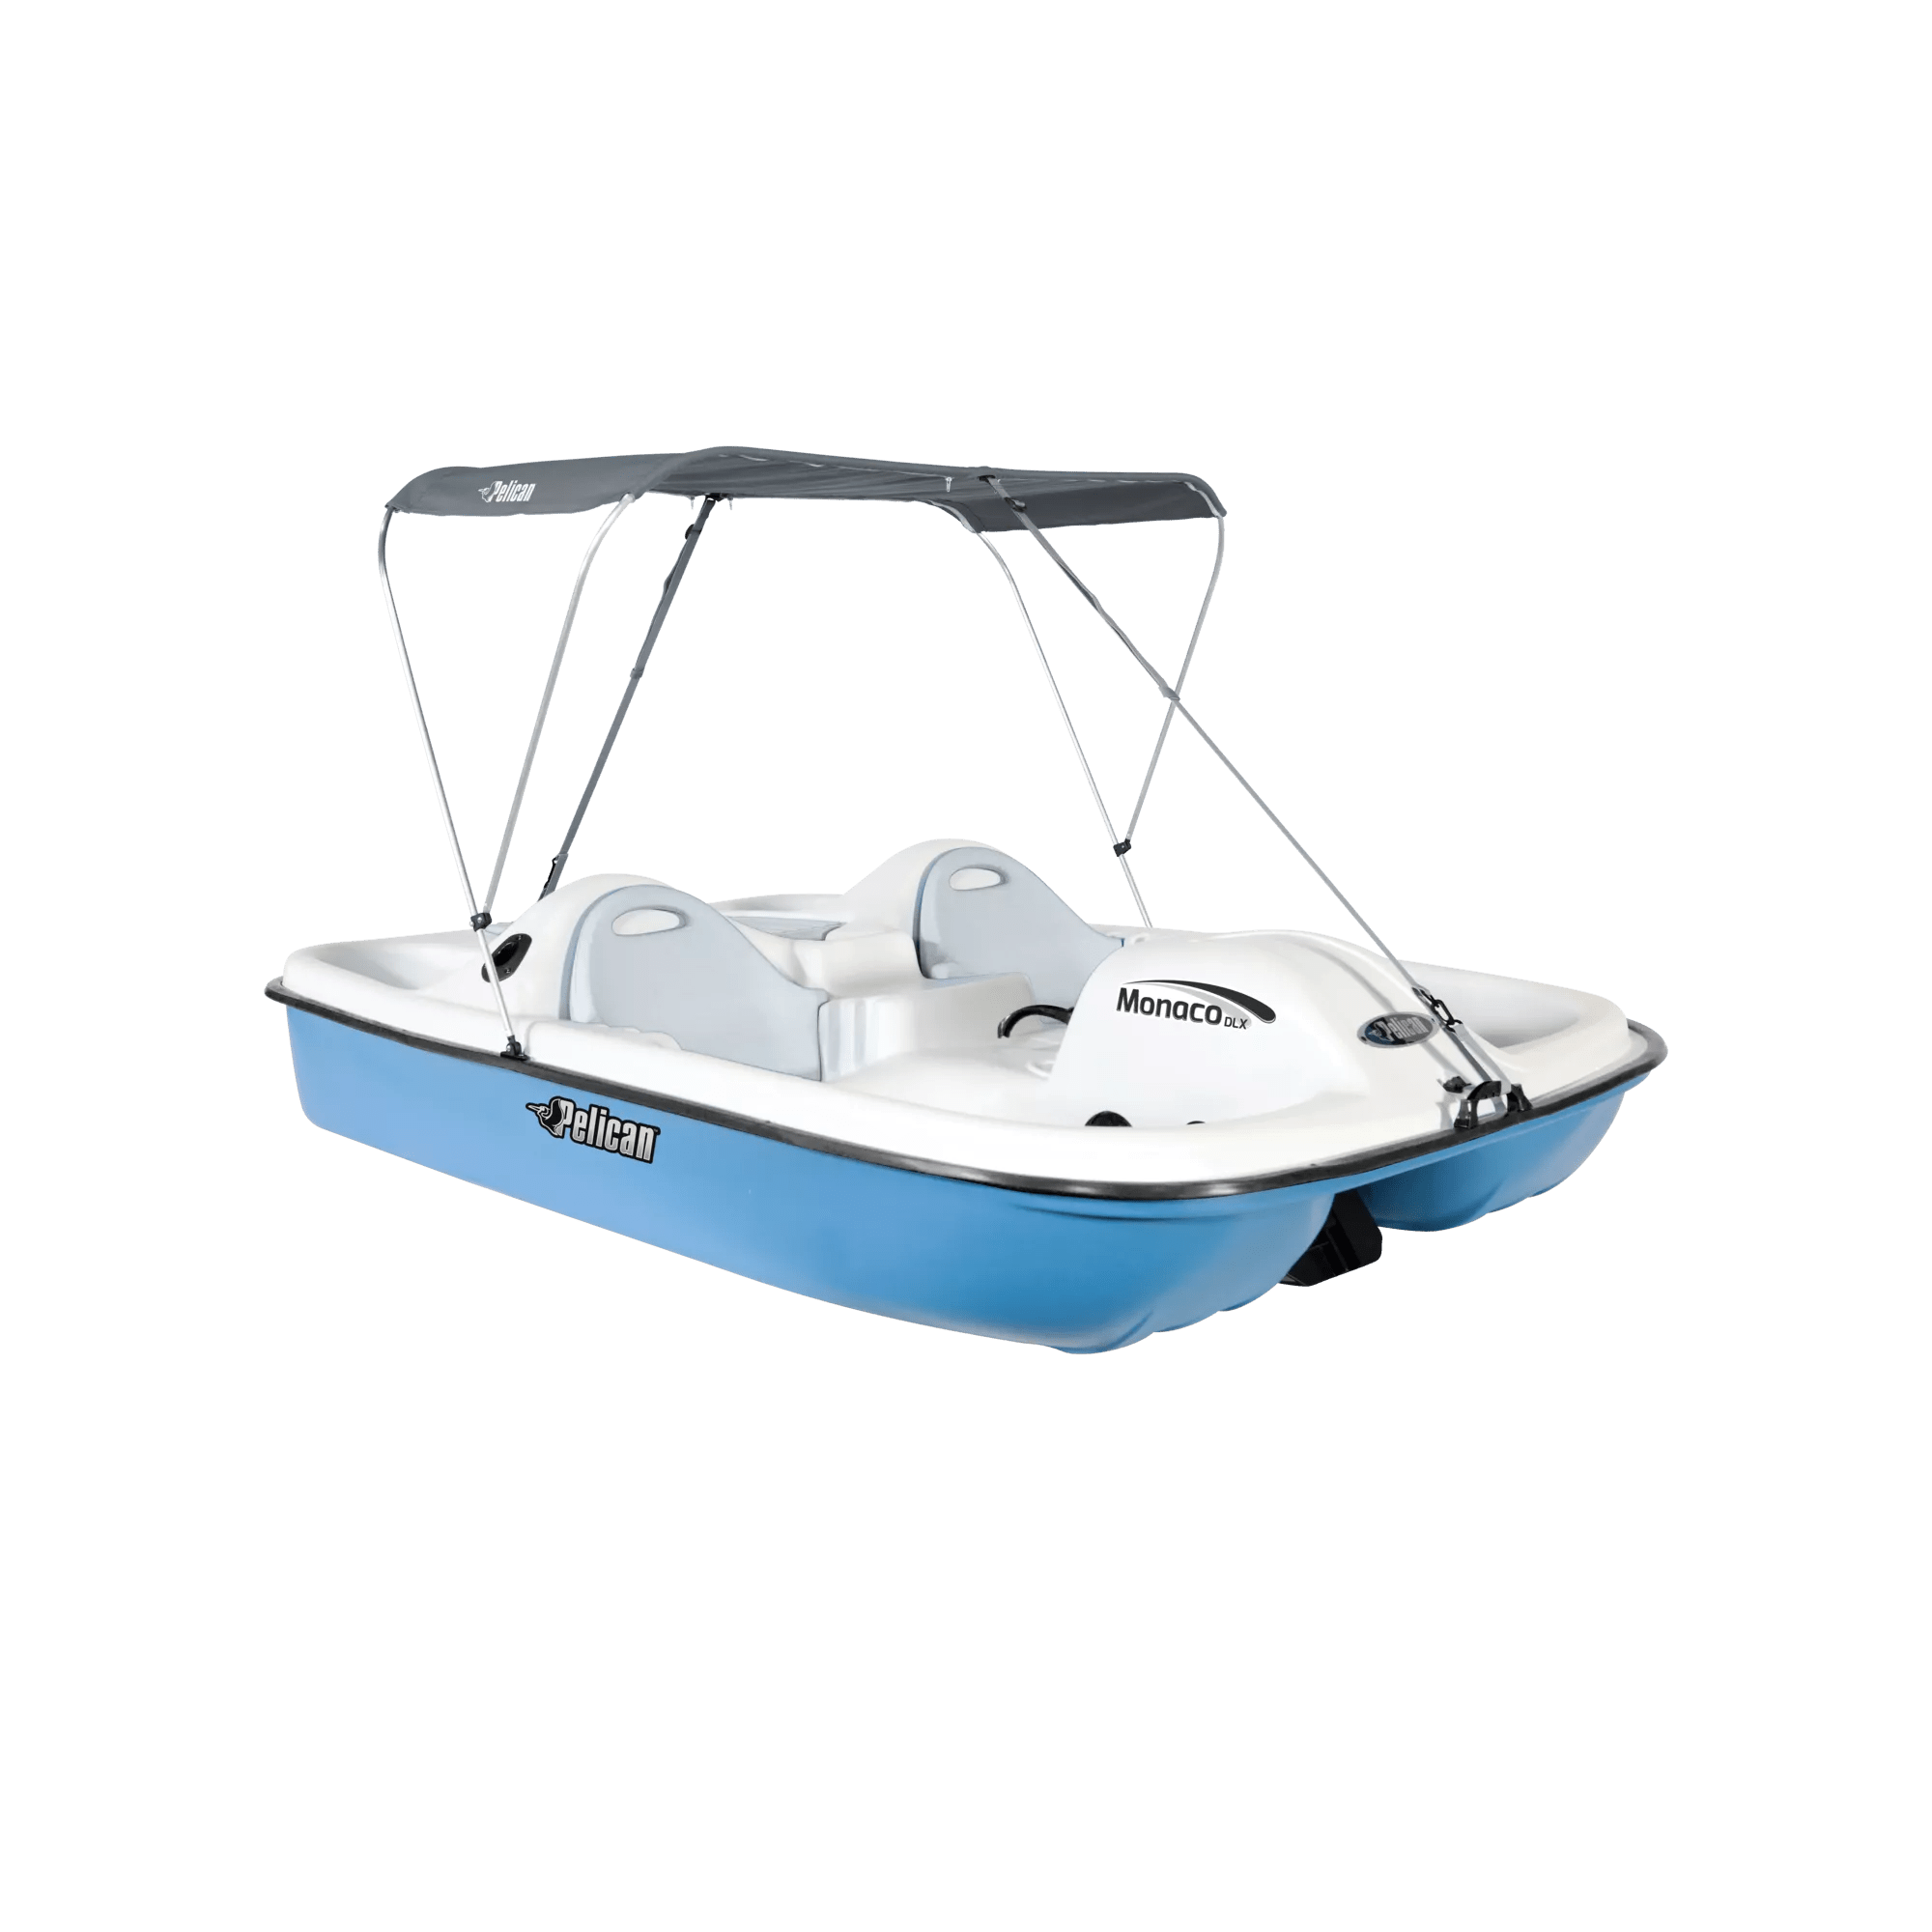 PELICAN - Monaco DLX Pedal Boat with Canopy - White - HHA25P109 - 